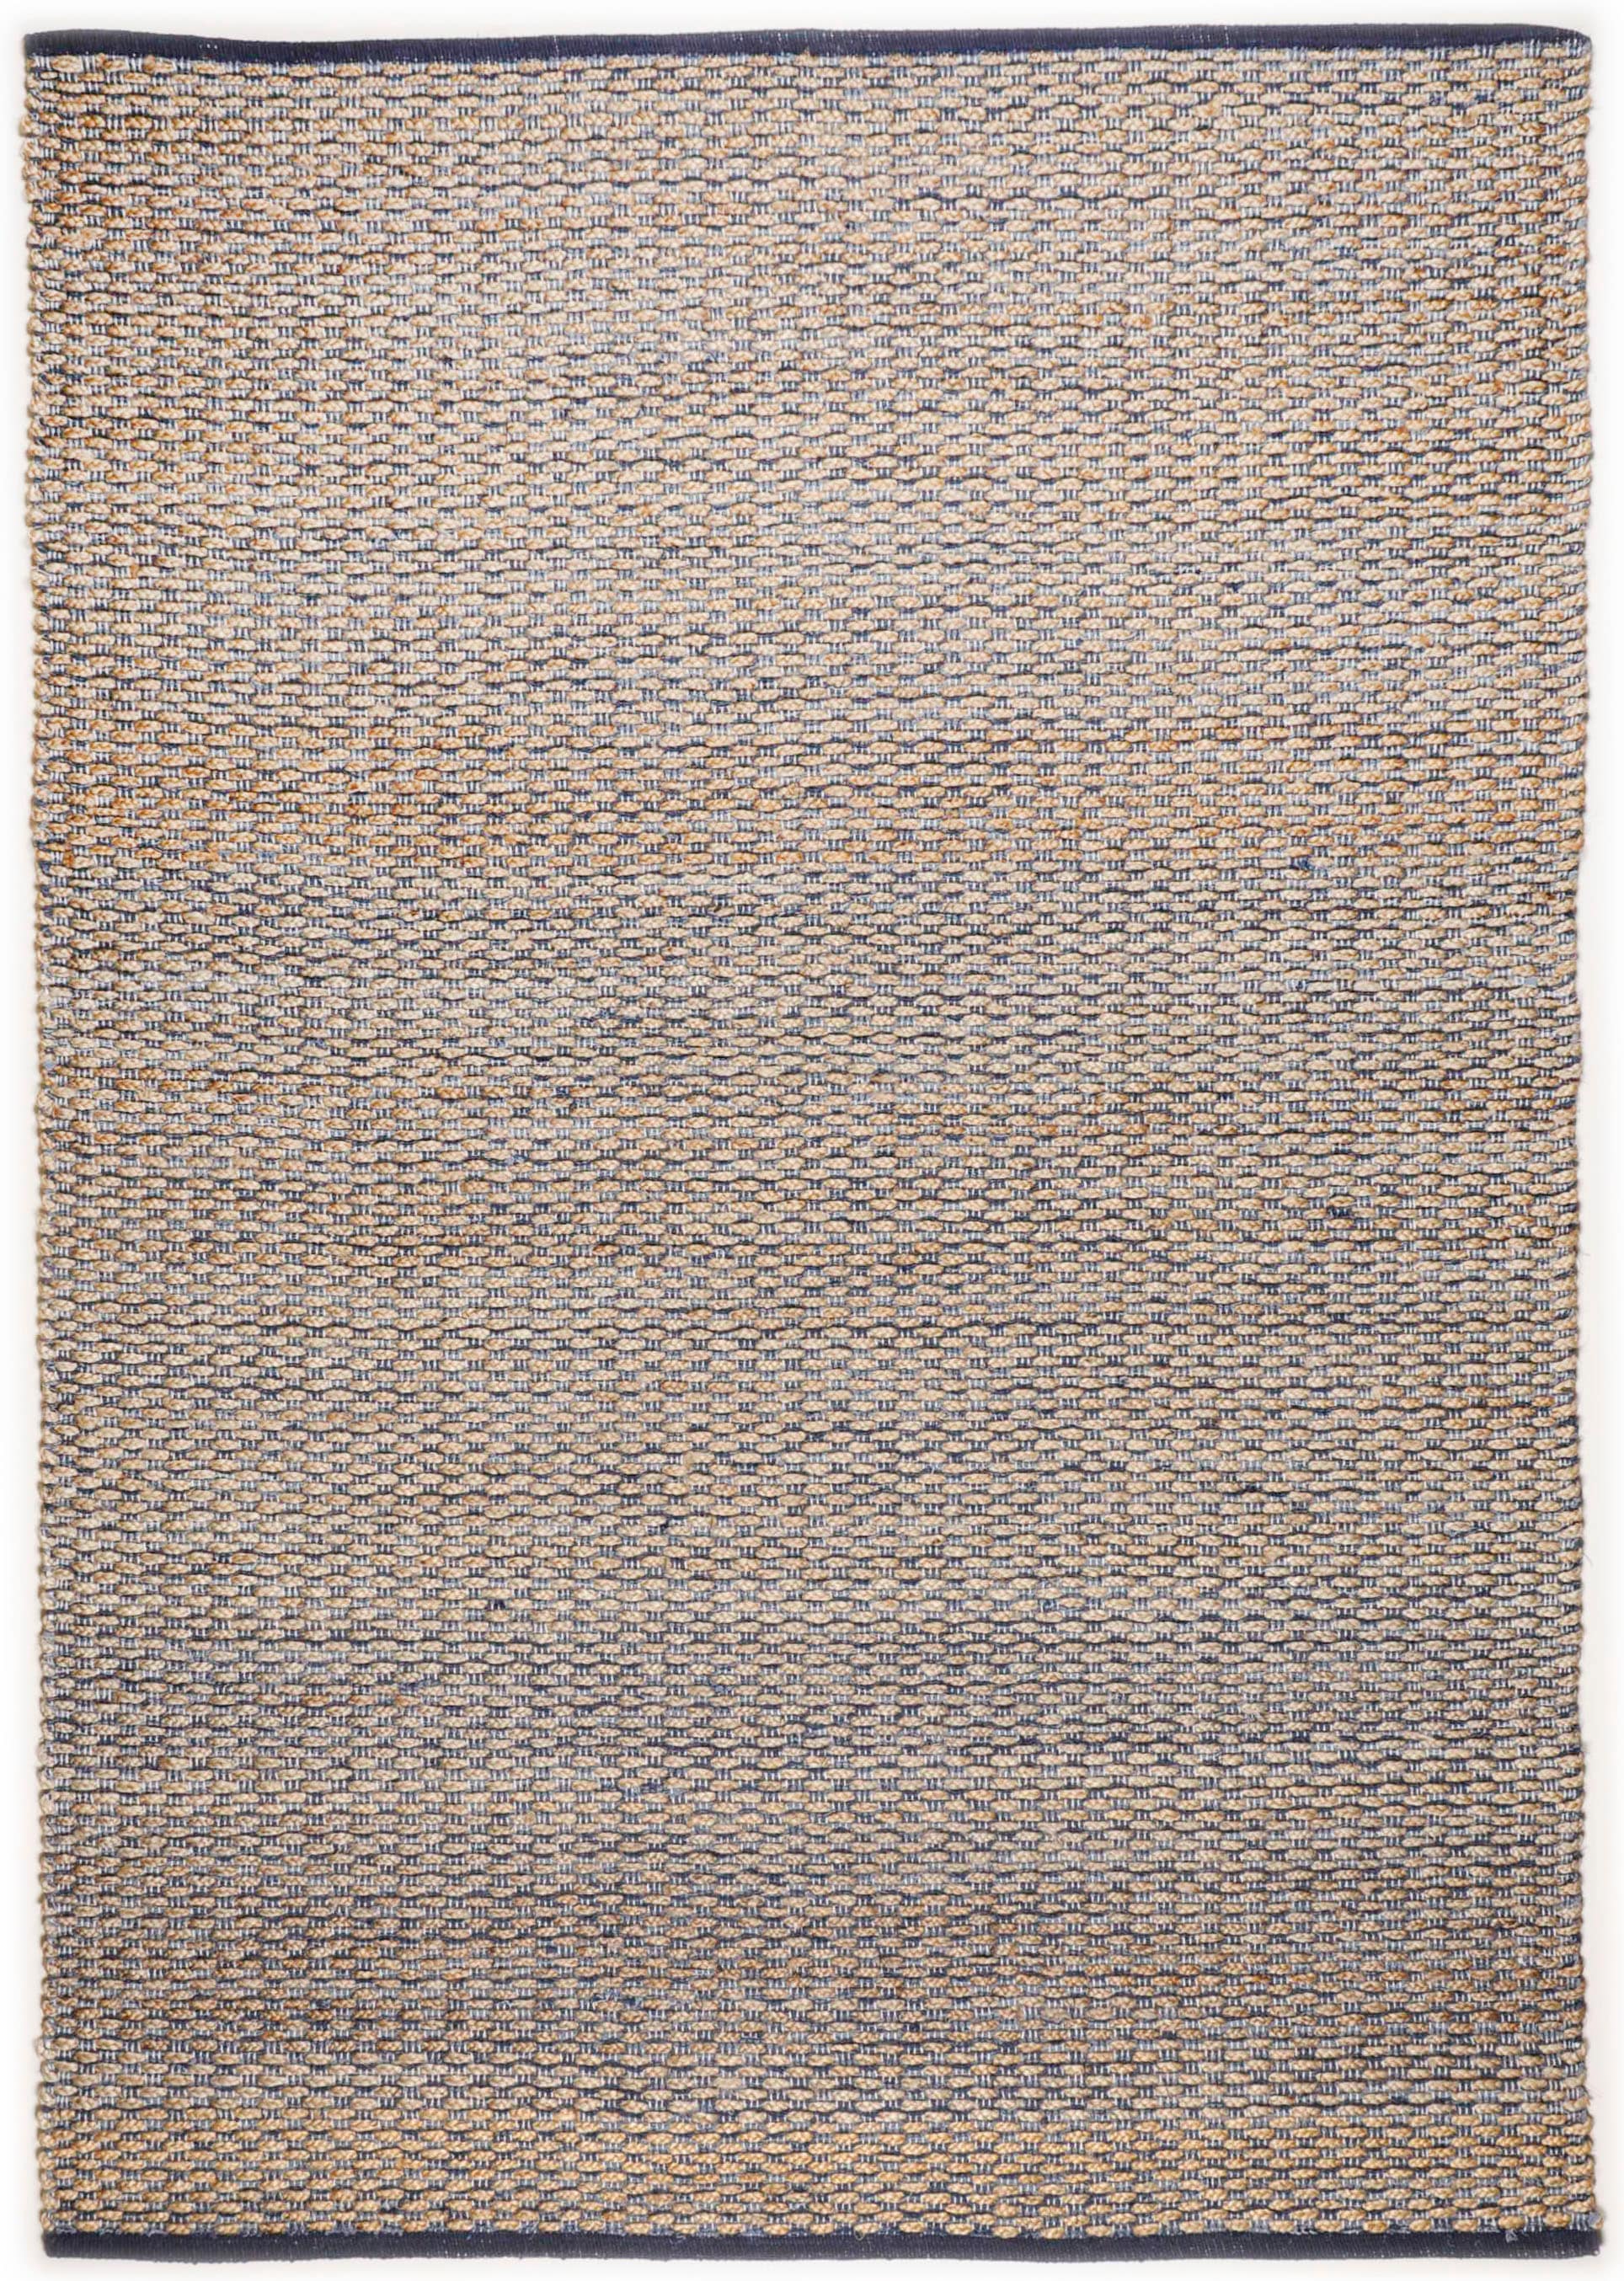 TOM TAILOR HOME Teppich "Braid", rechteckig, Flachgewebe, handgewebt, Material: 70% Jute, 30% Baumwolle